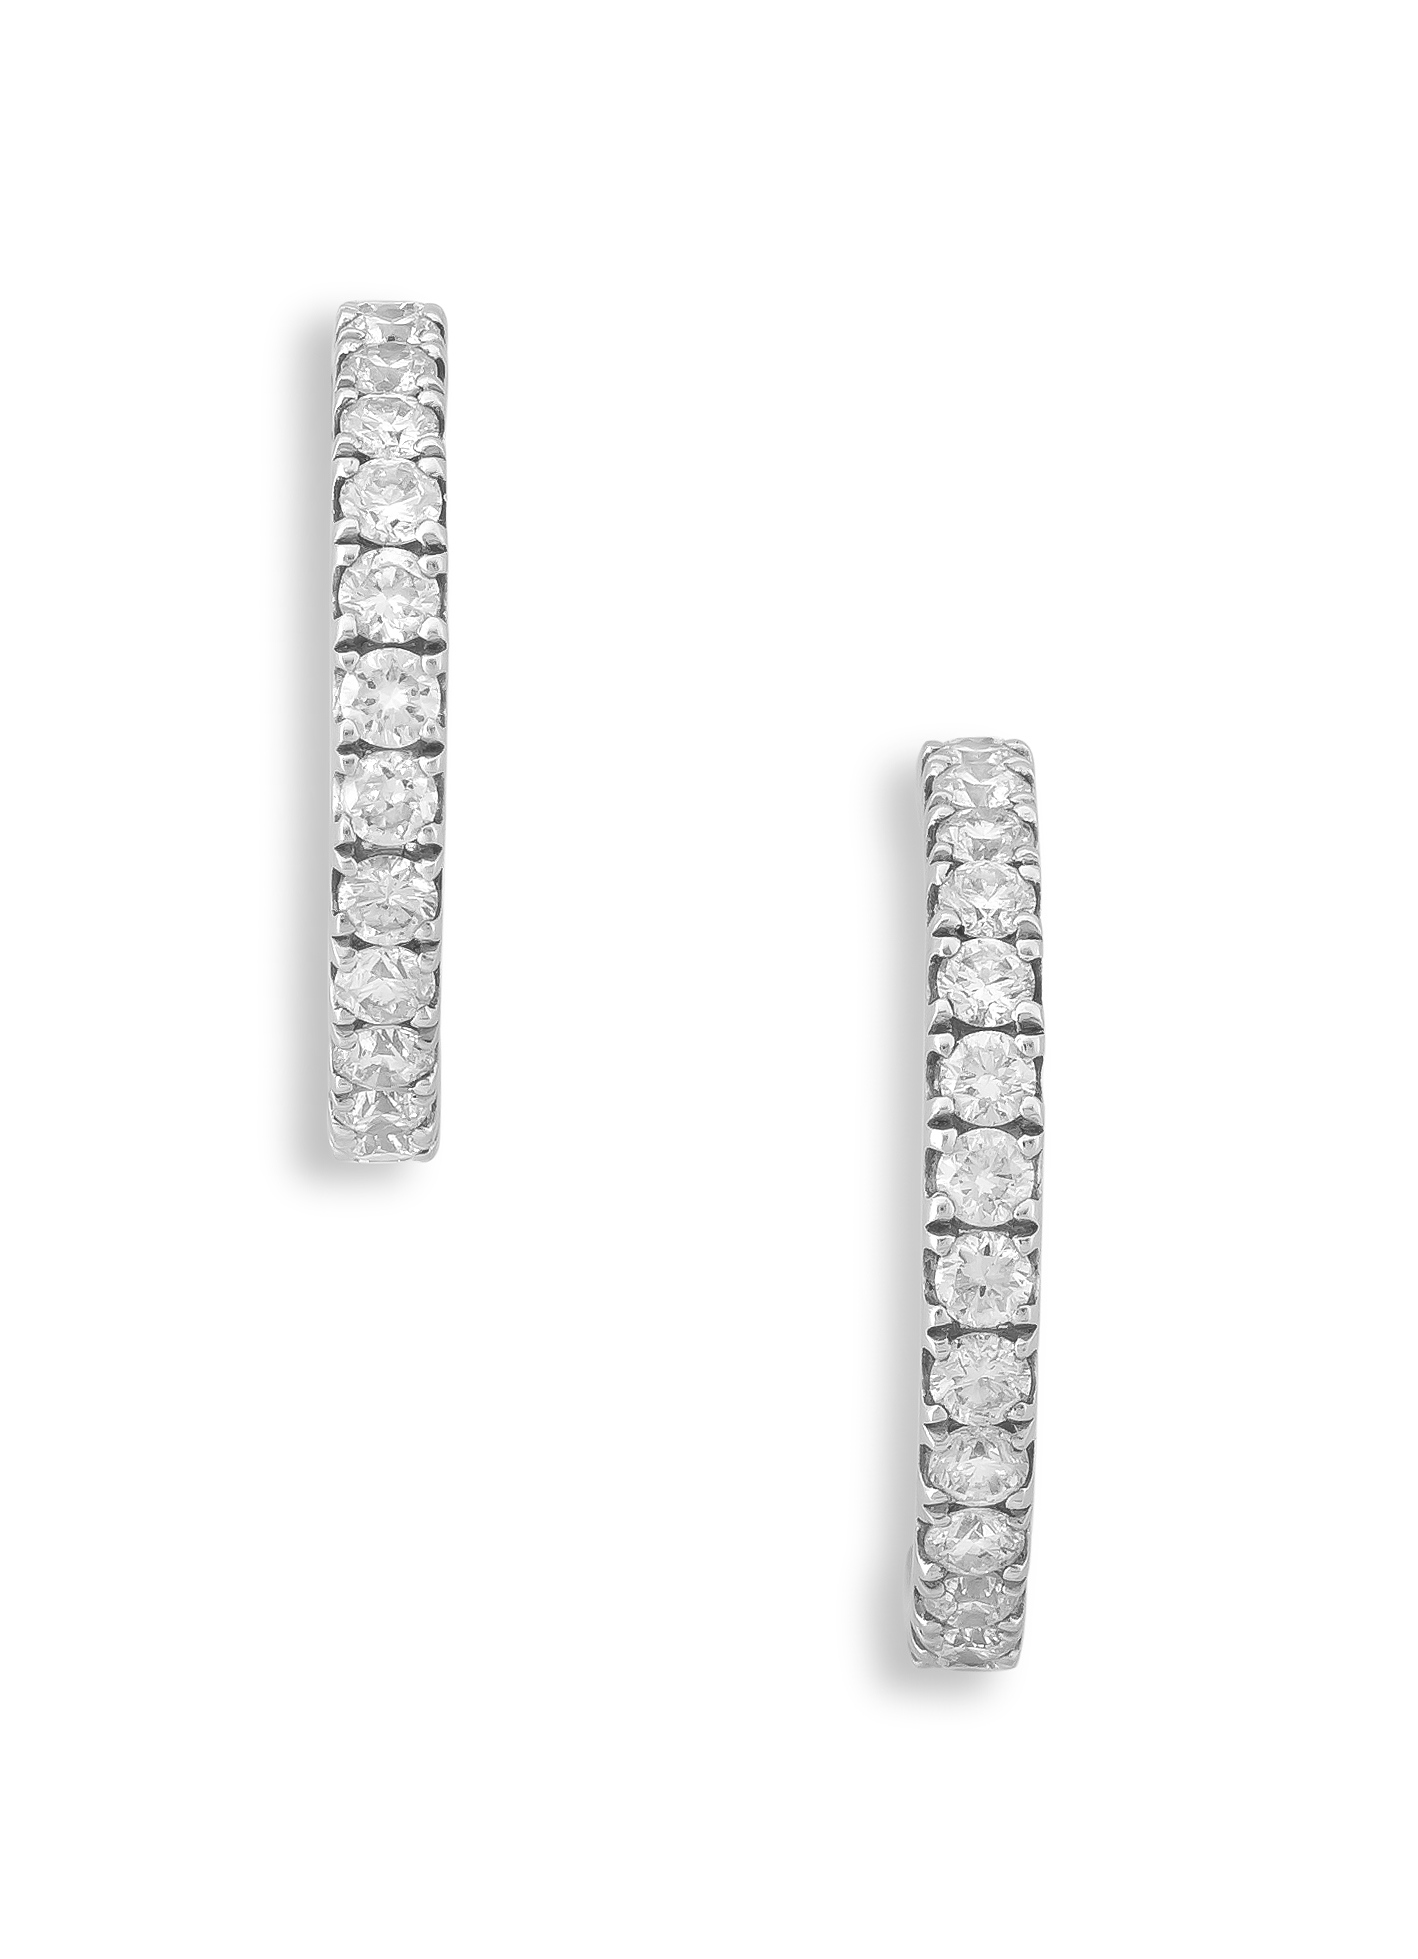 Pair of half-hoop diamond and 18ct white gold earrings